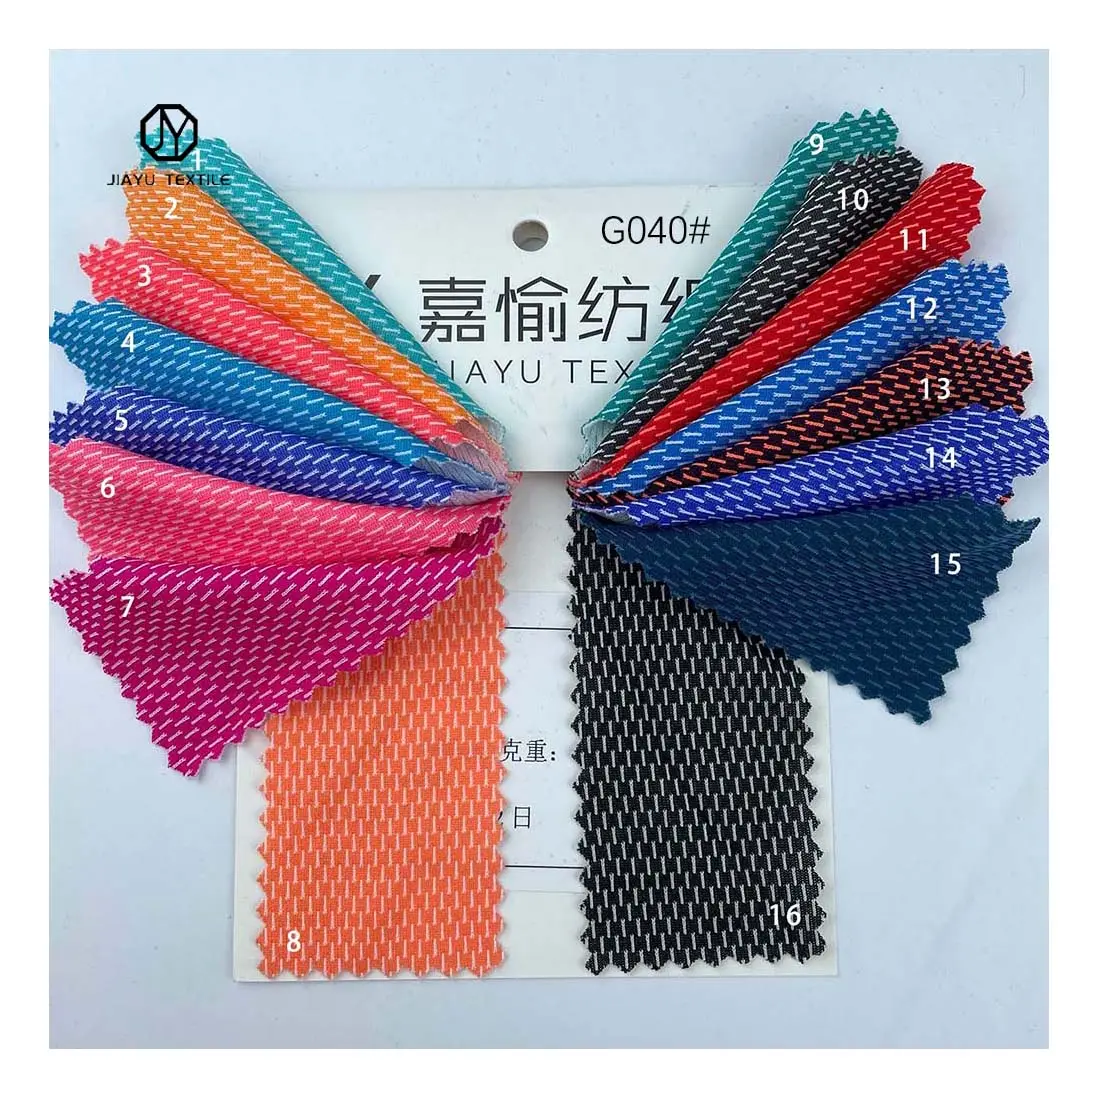 Guangdong Textile 100d malla de doble capa tela que absorbe la humedad 150gsm poliéster ropa deportiva camiseta tela de malla